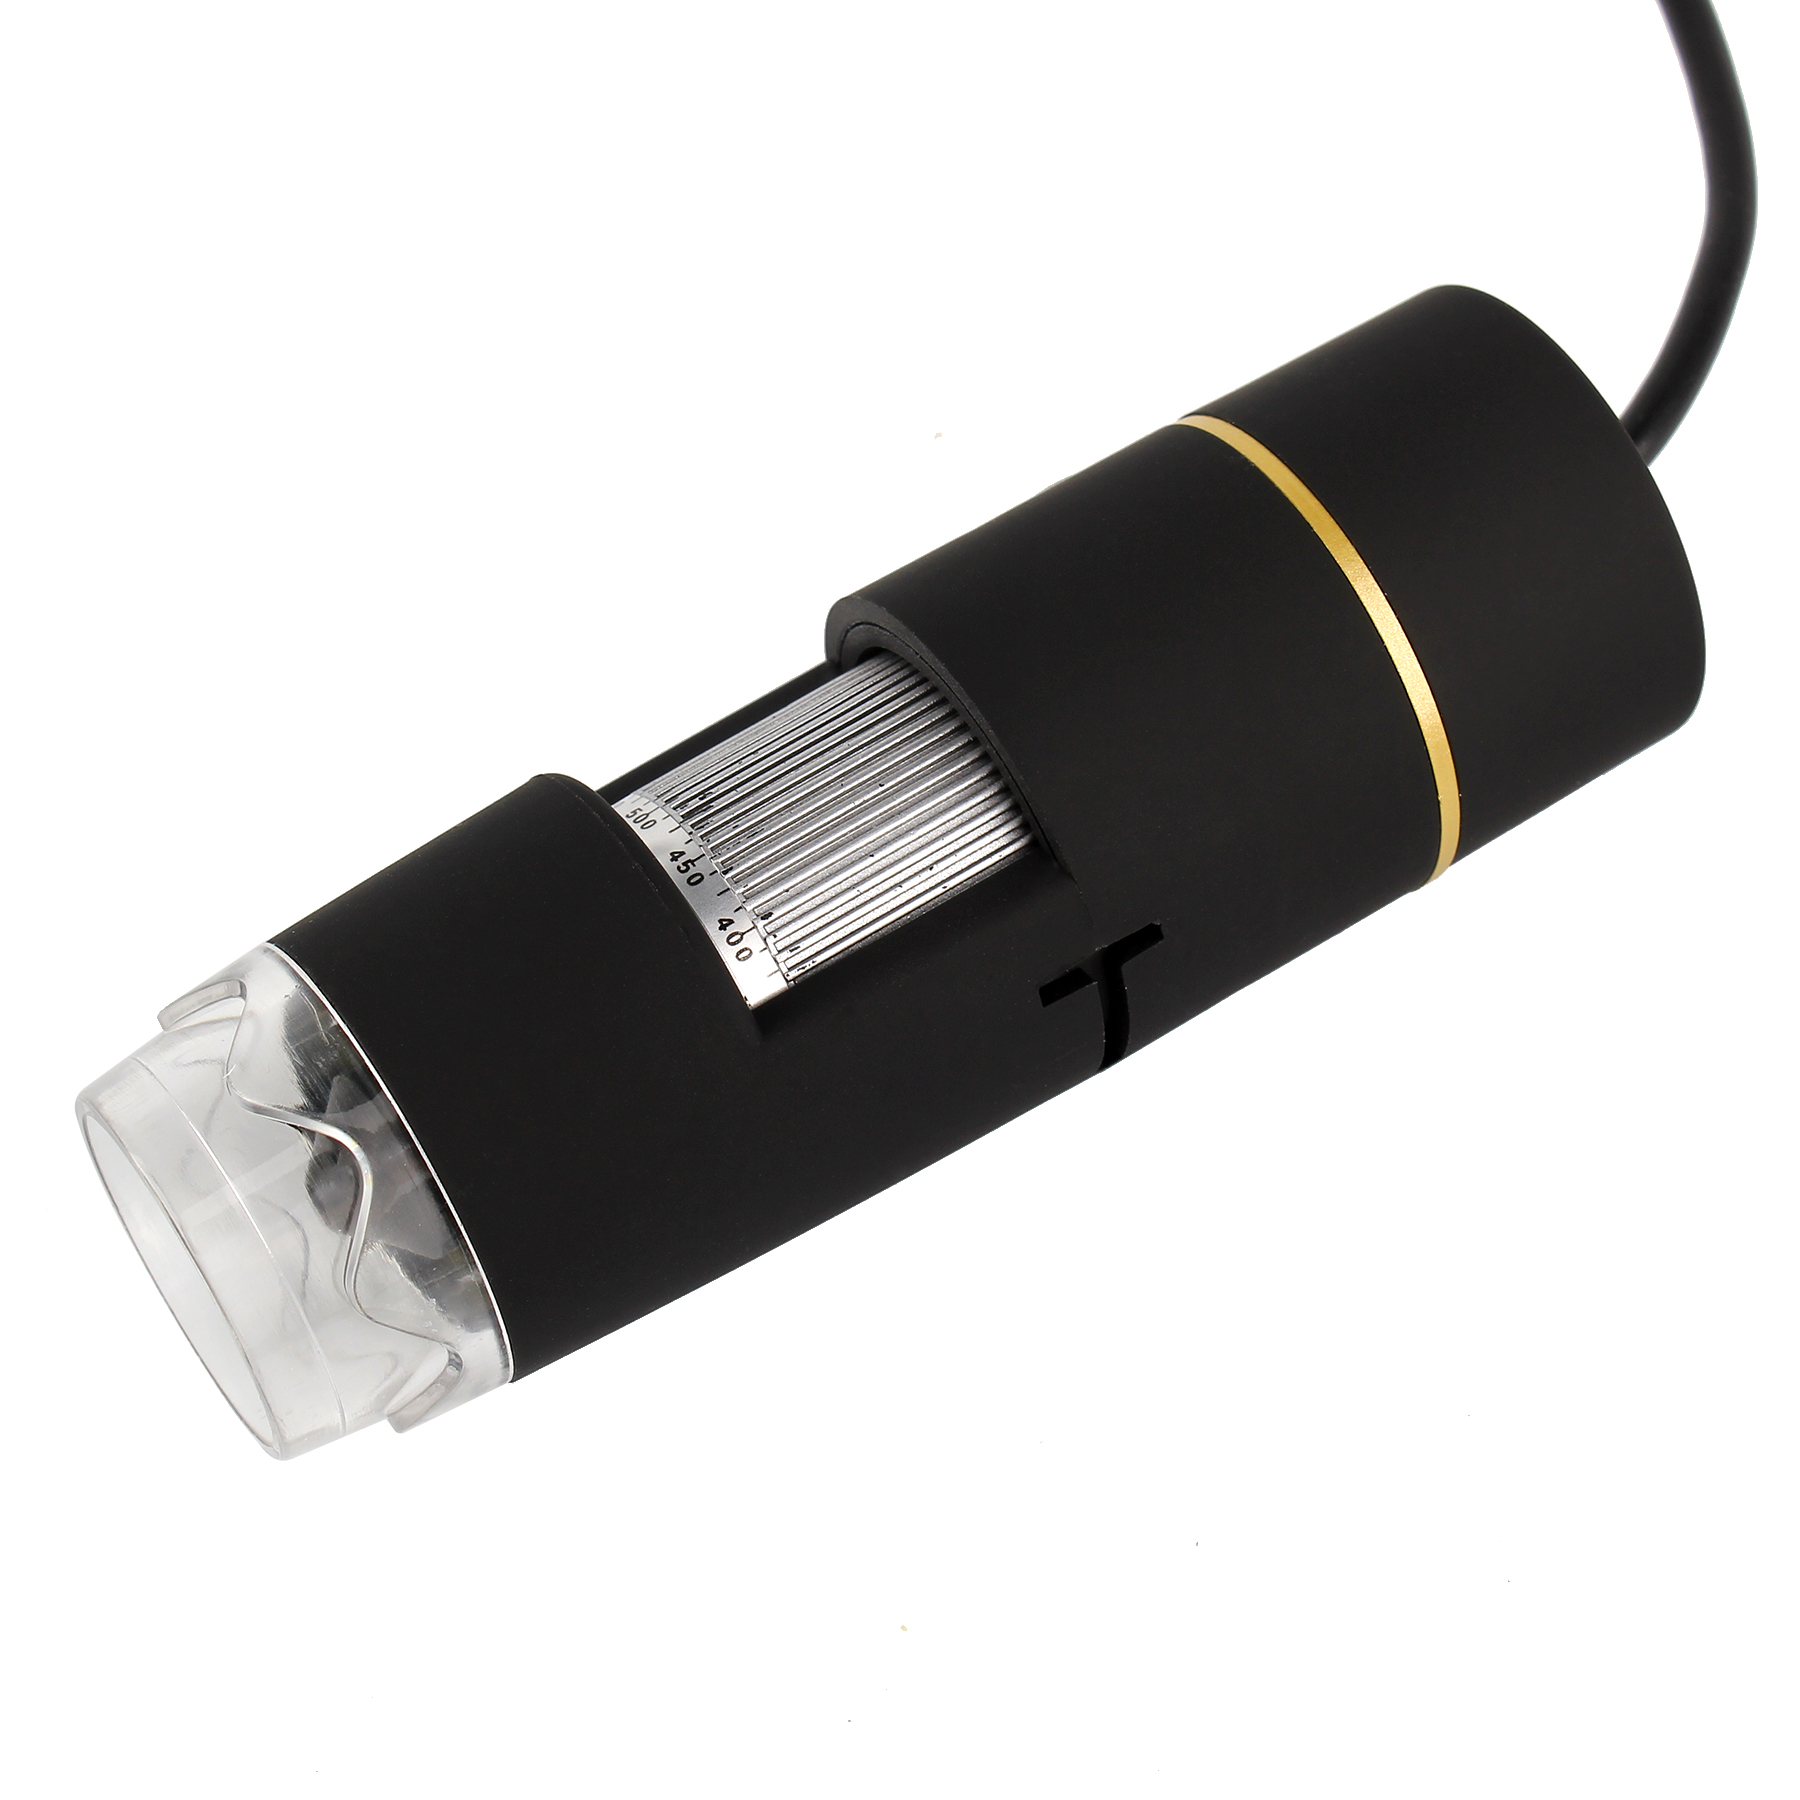 S2-USB-8-LED-1X-500X-Digital-Microscope-Endoscope-Magnifier-Video-Camera-Real-03MP13MP2MP-1043636-4